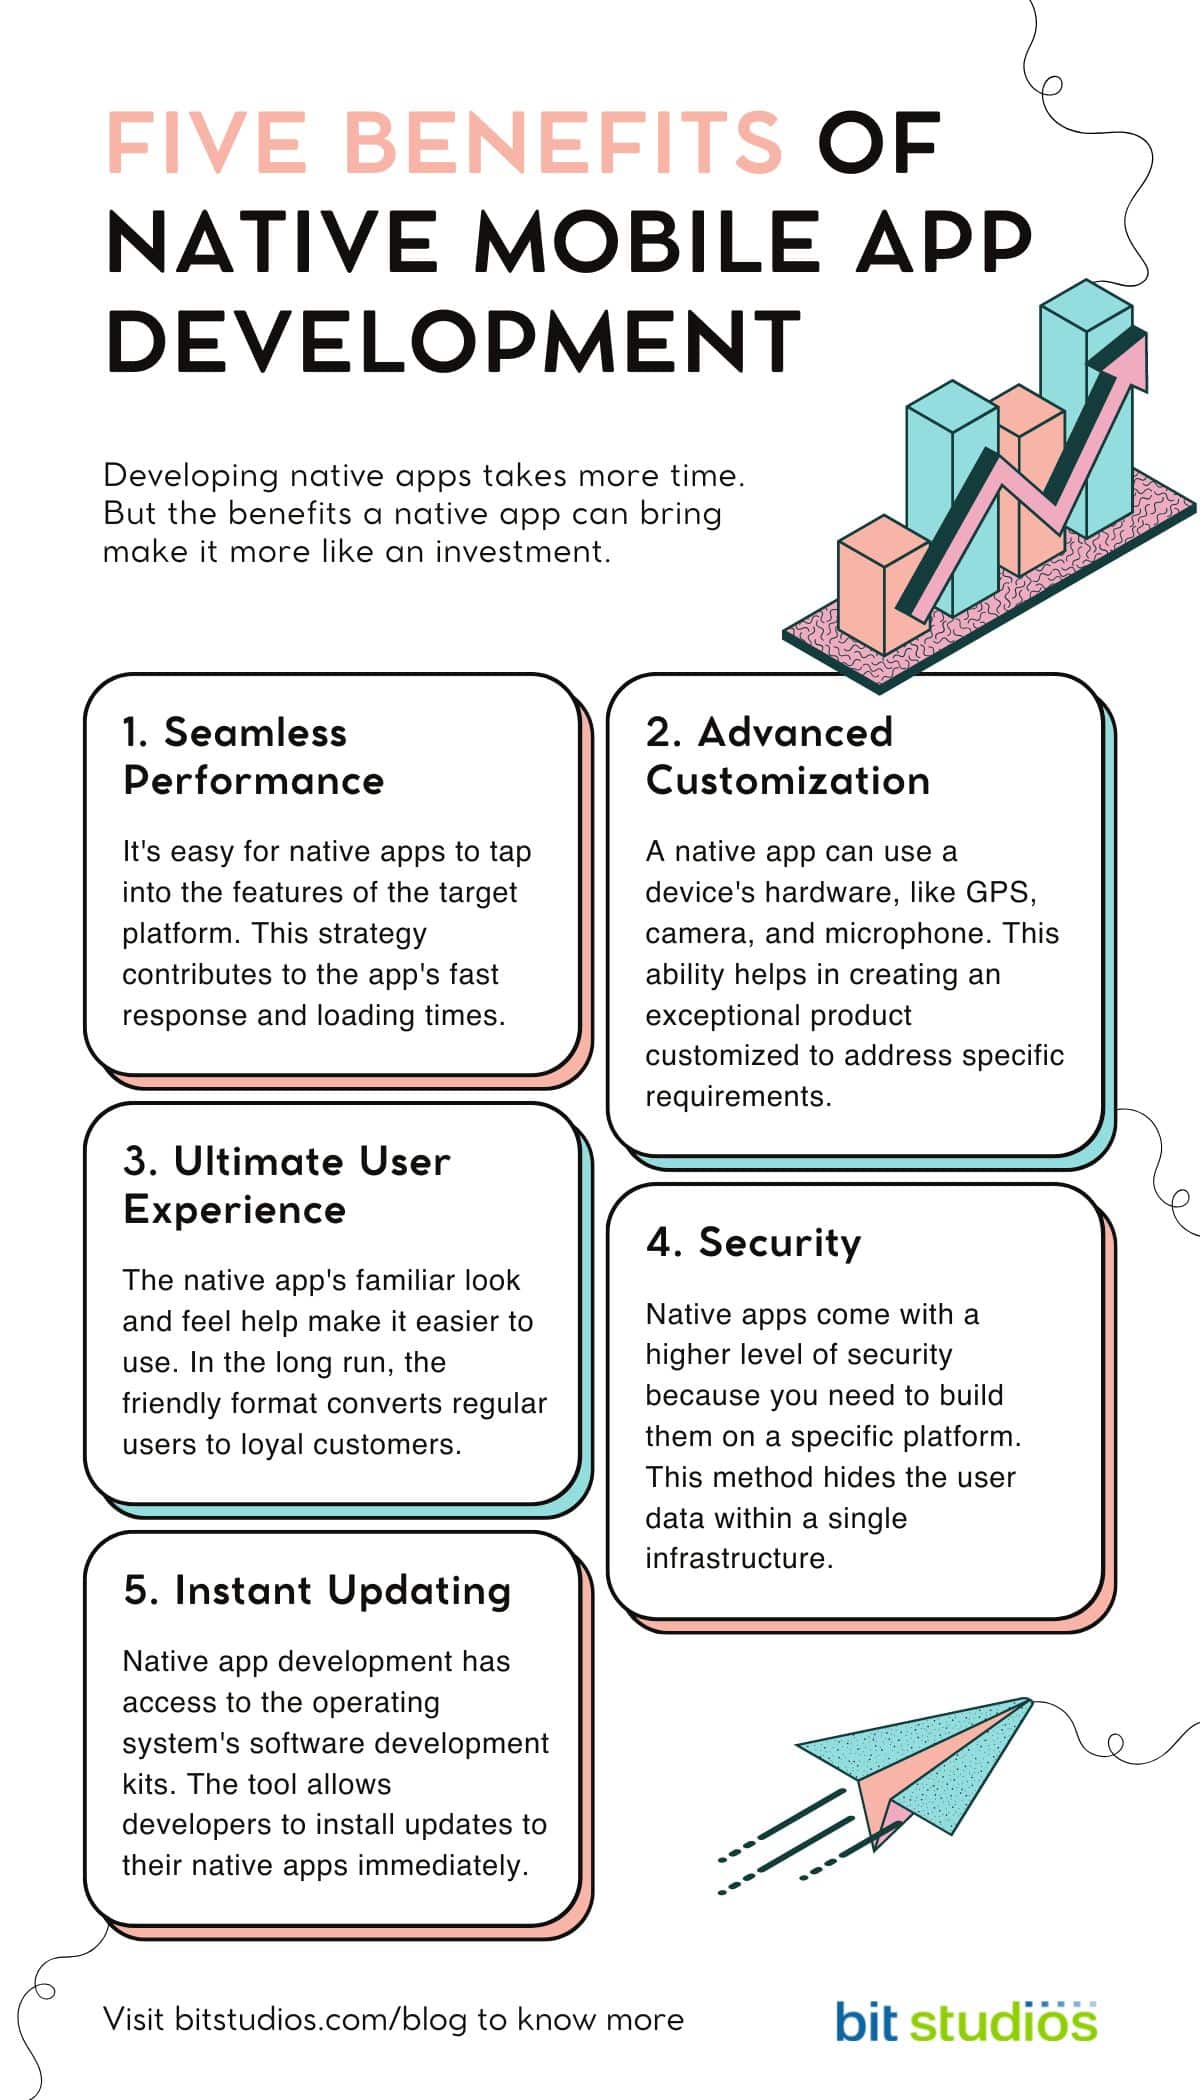 Five Benefits of Native Mobile App Development